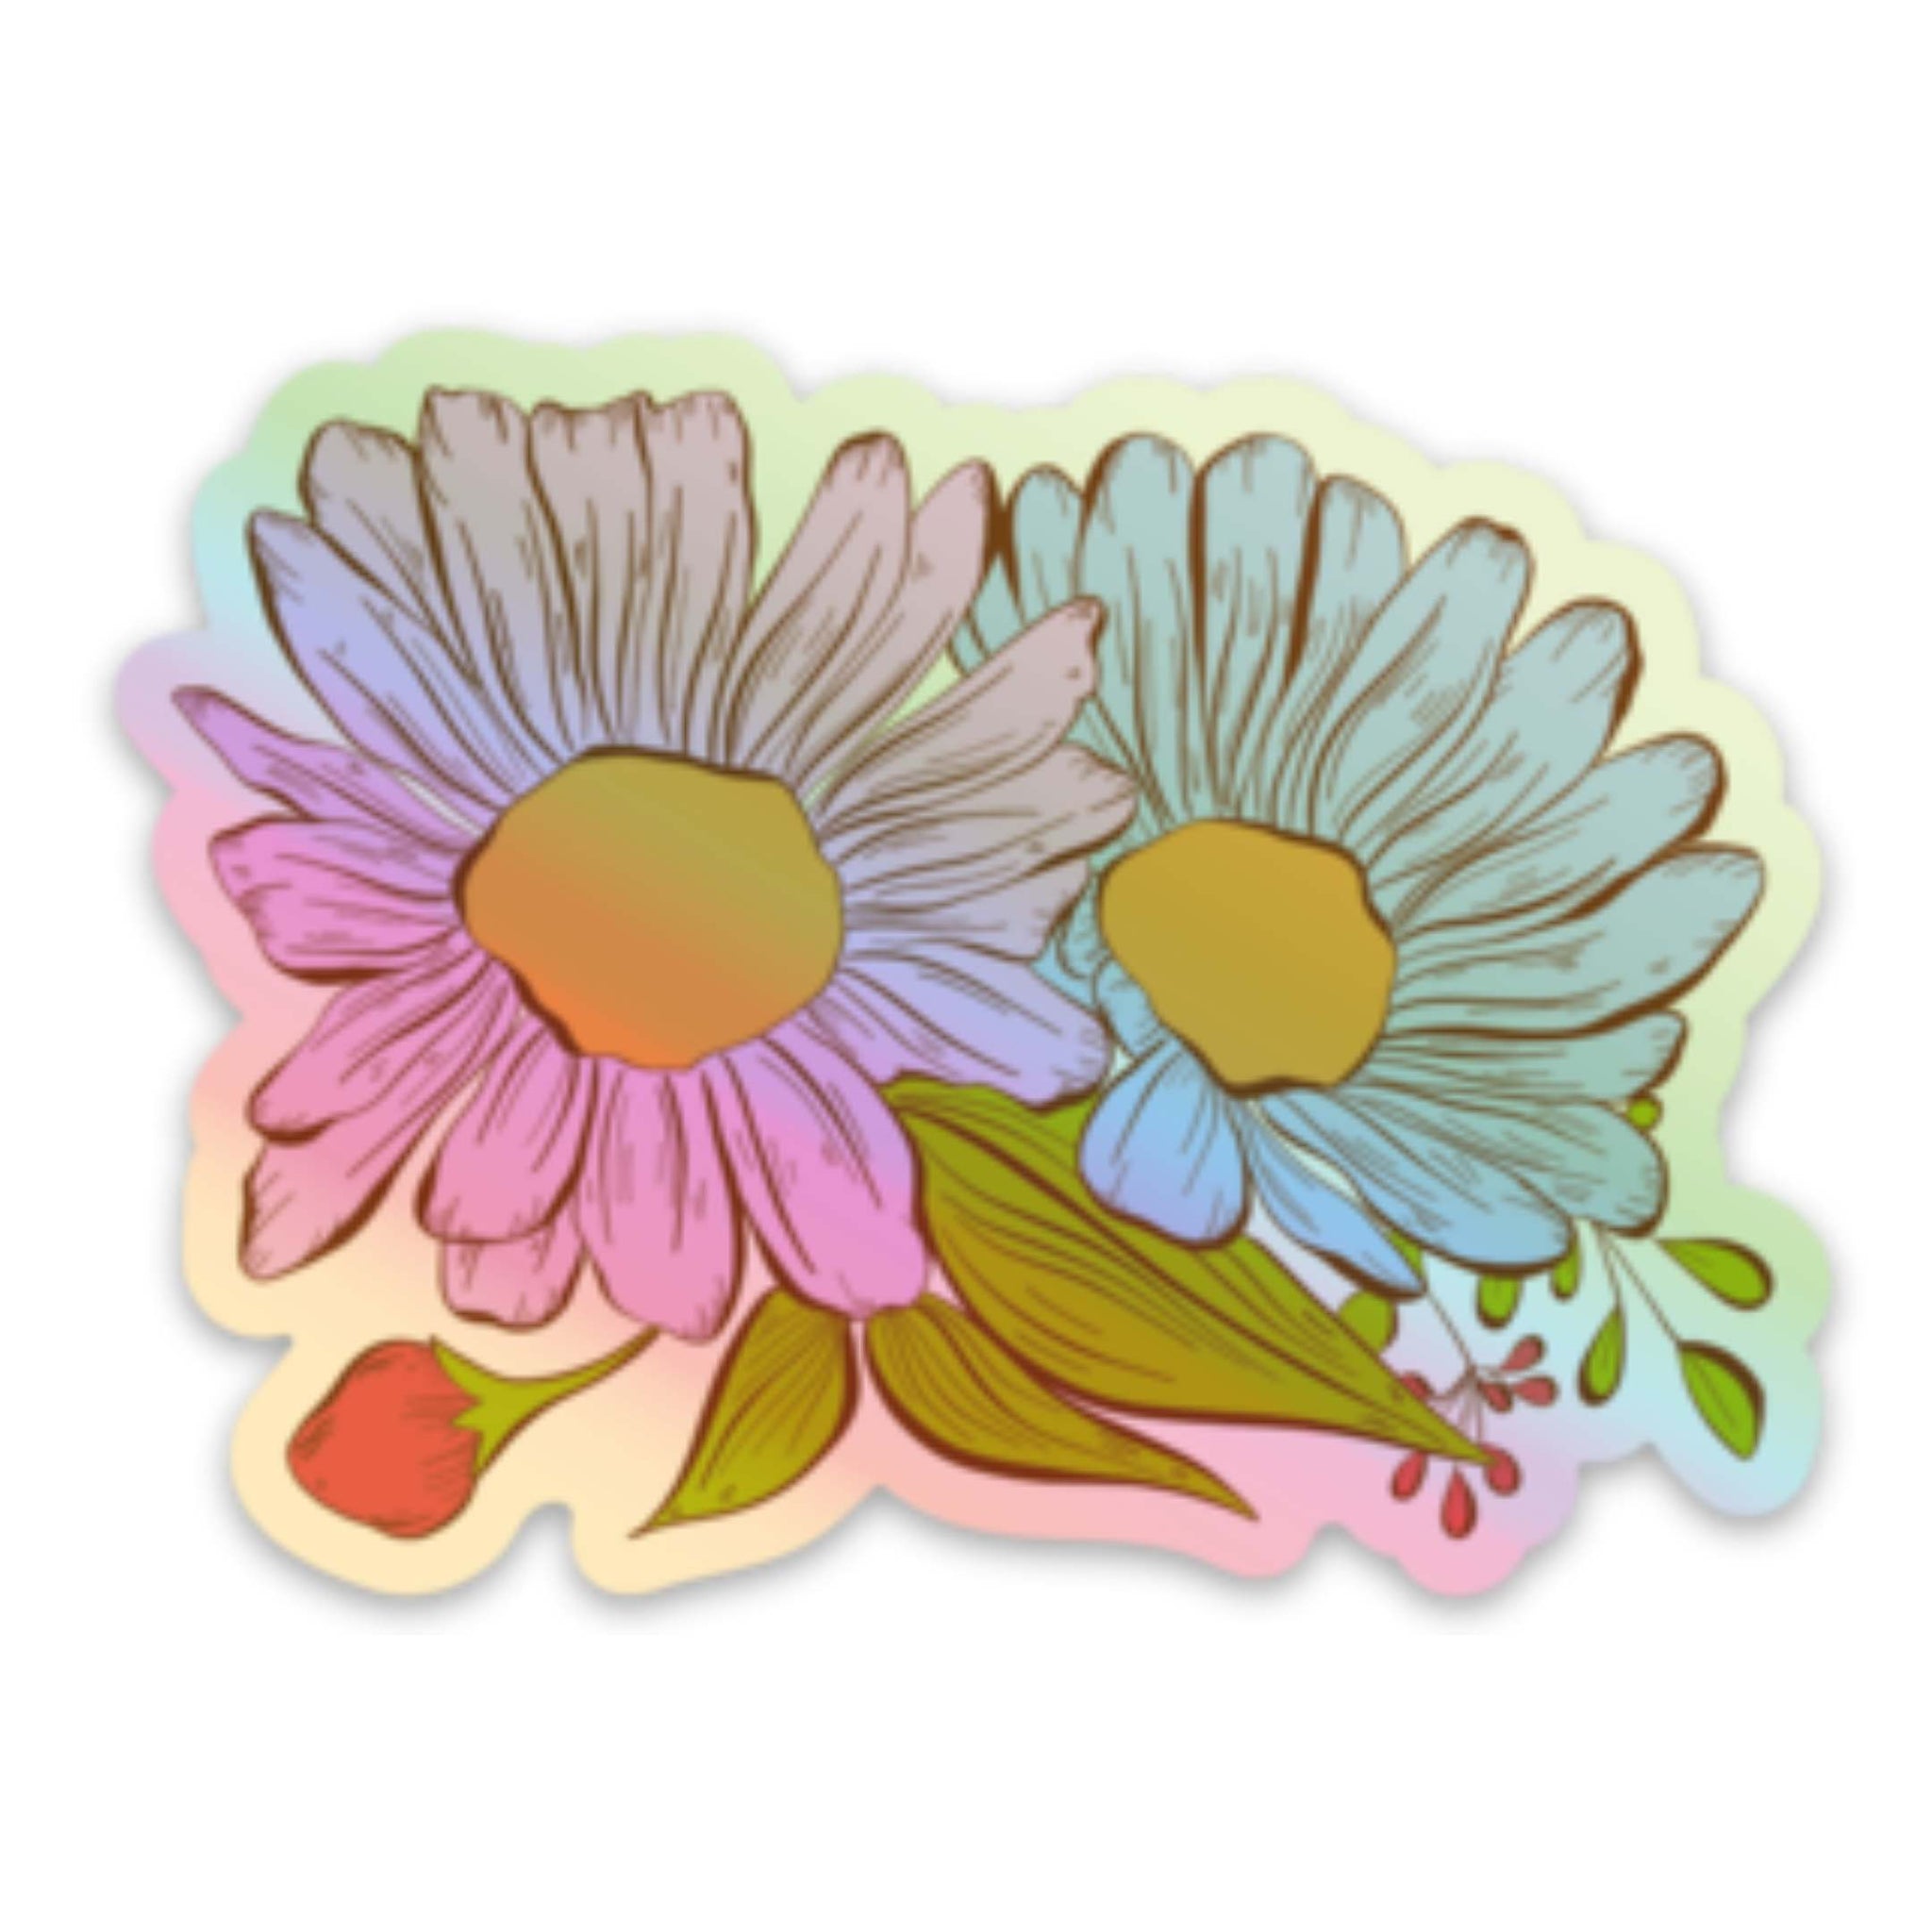 Sticker 2-Pack: Tread Lightly Mushroom & Wildflower Stickers